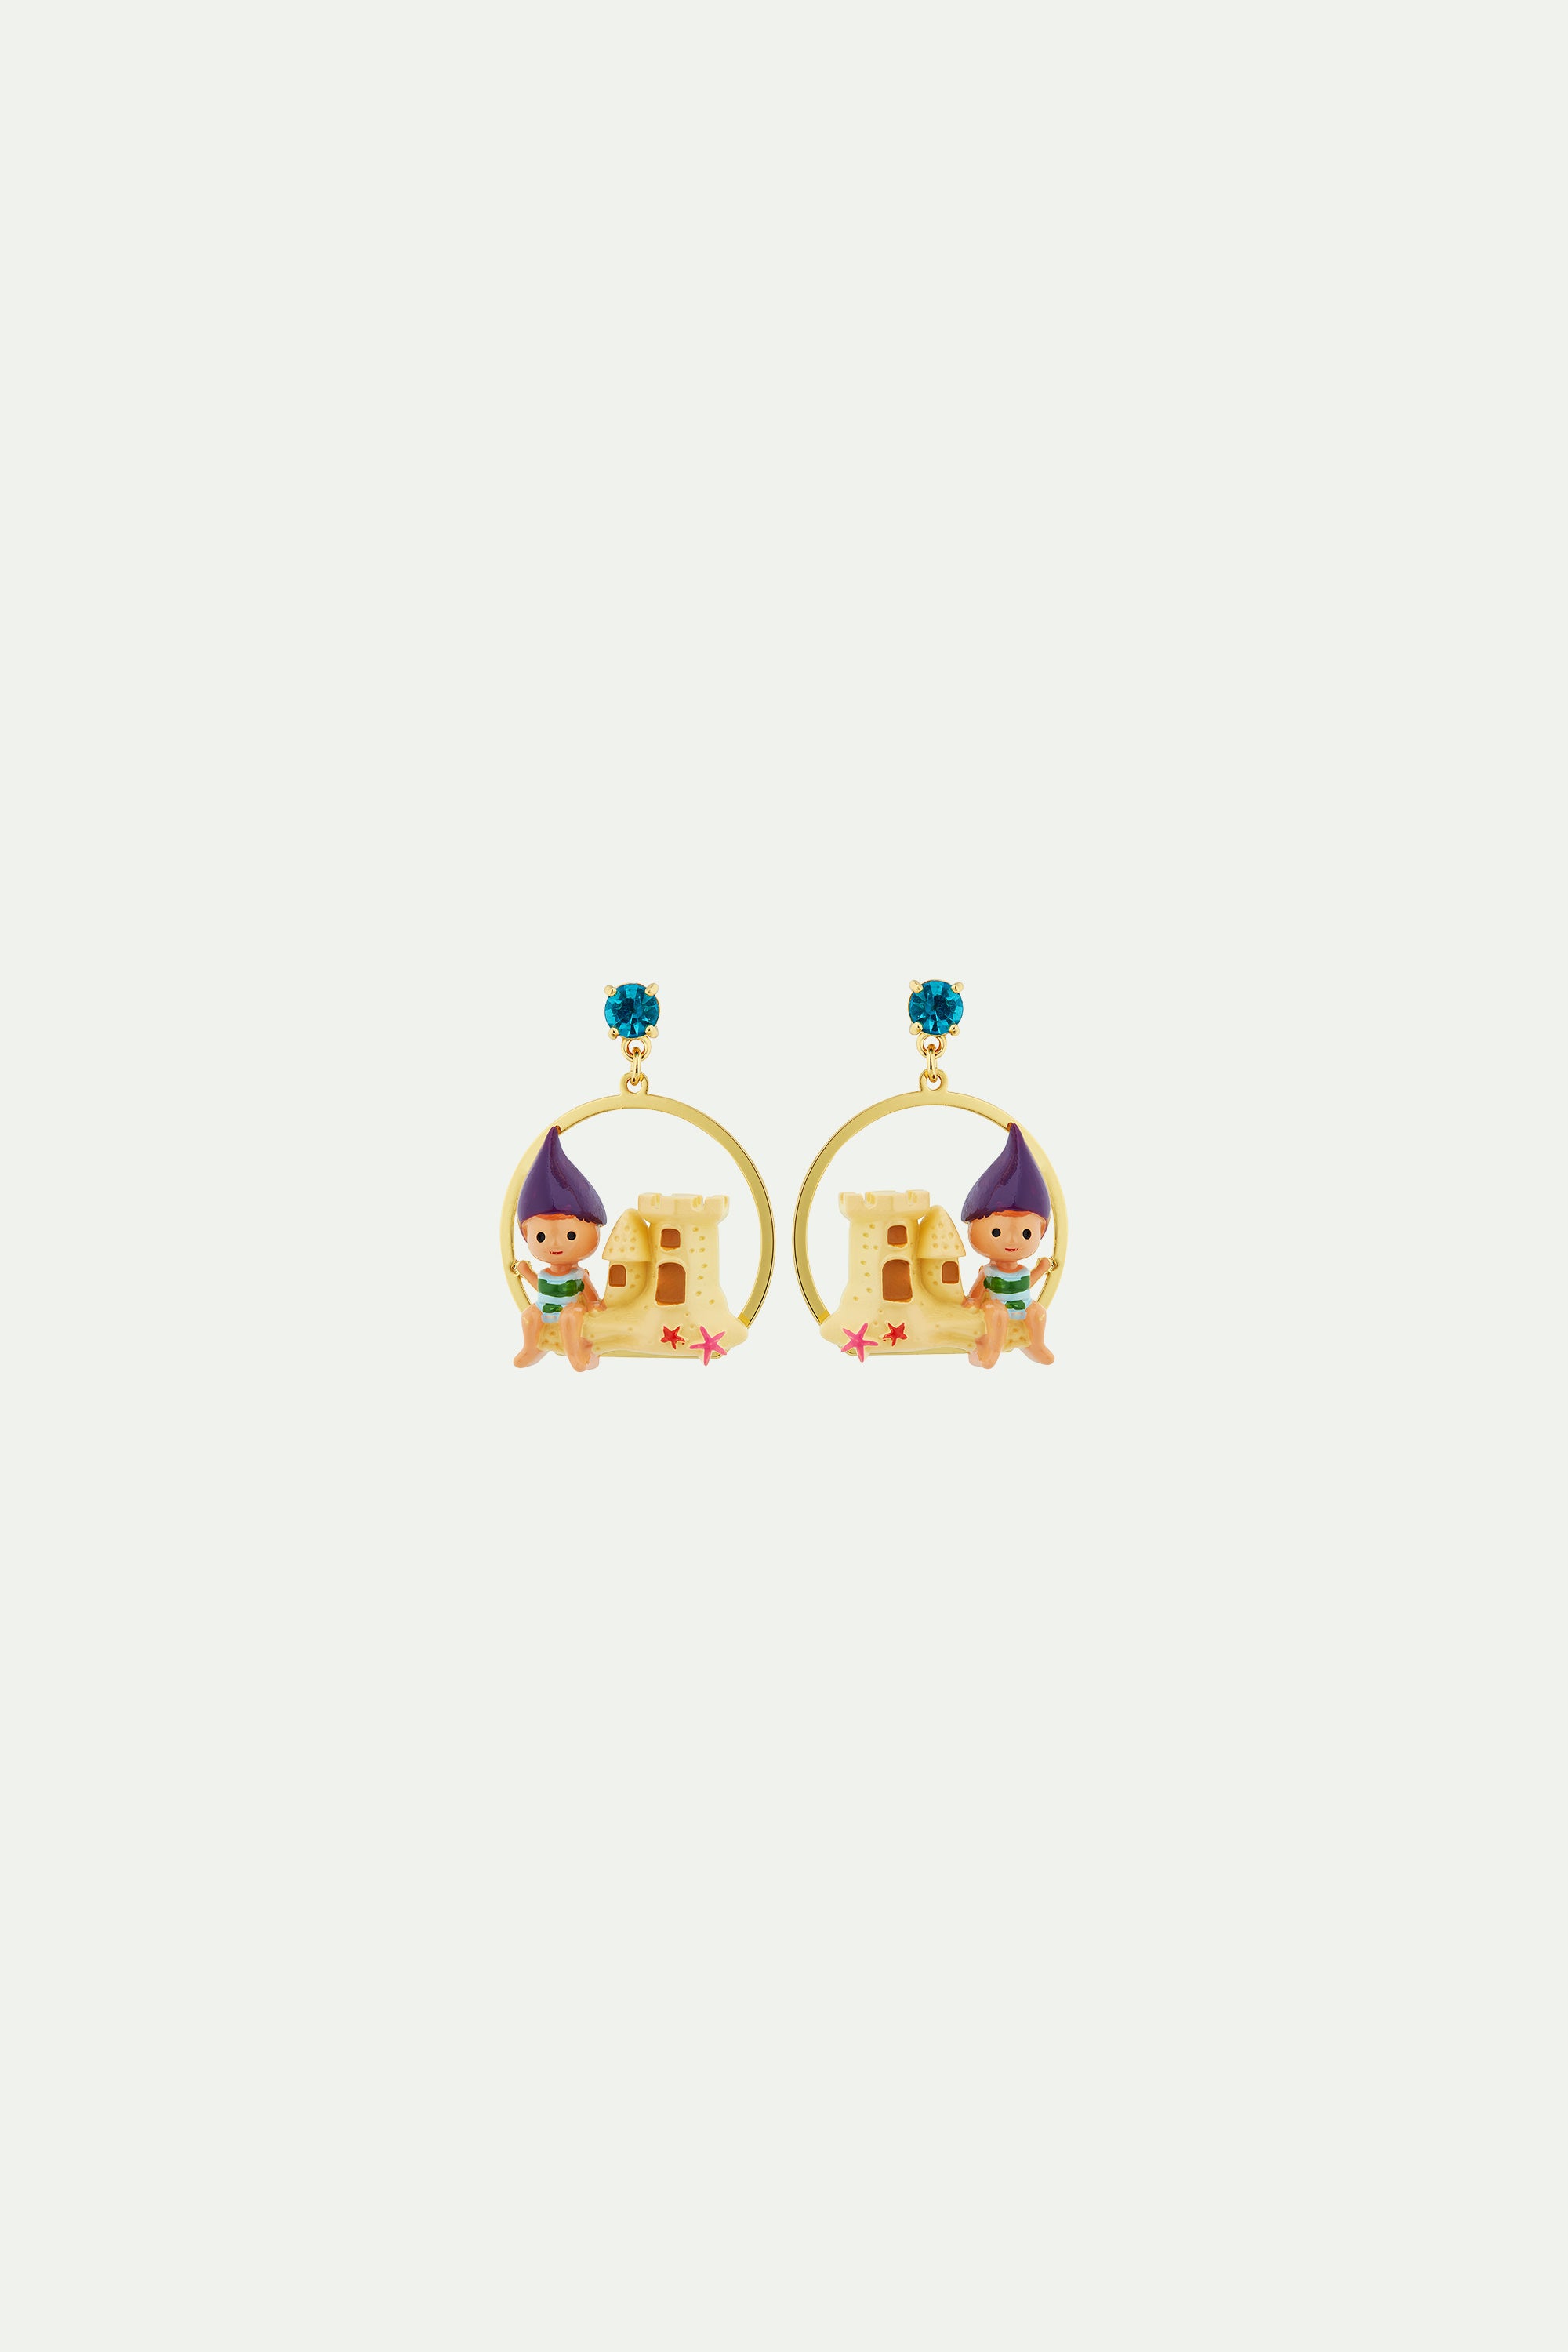 Garden gnome and sandcastle post earrings